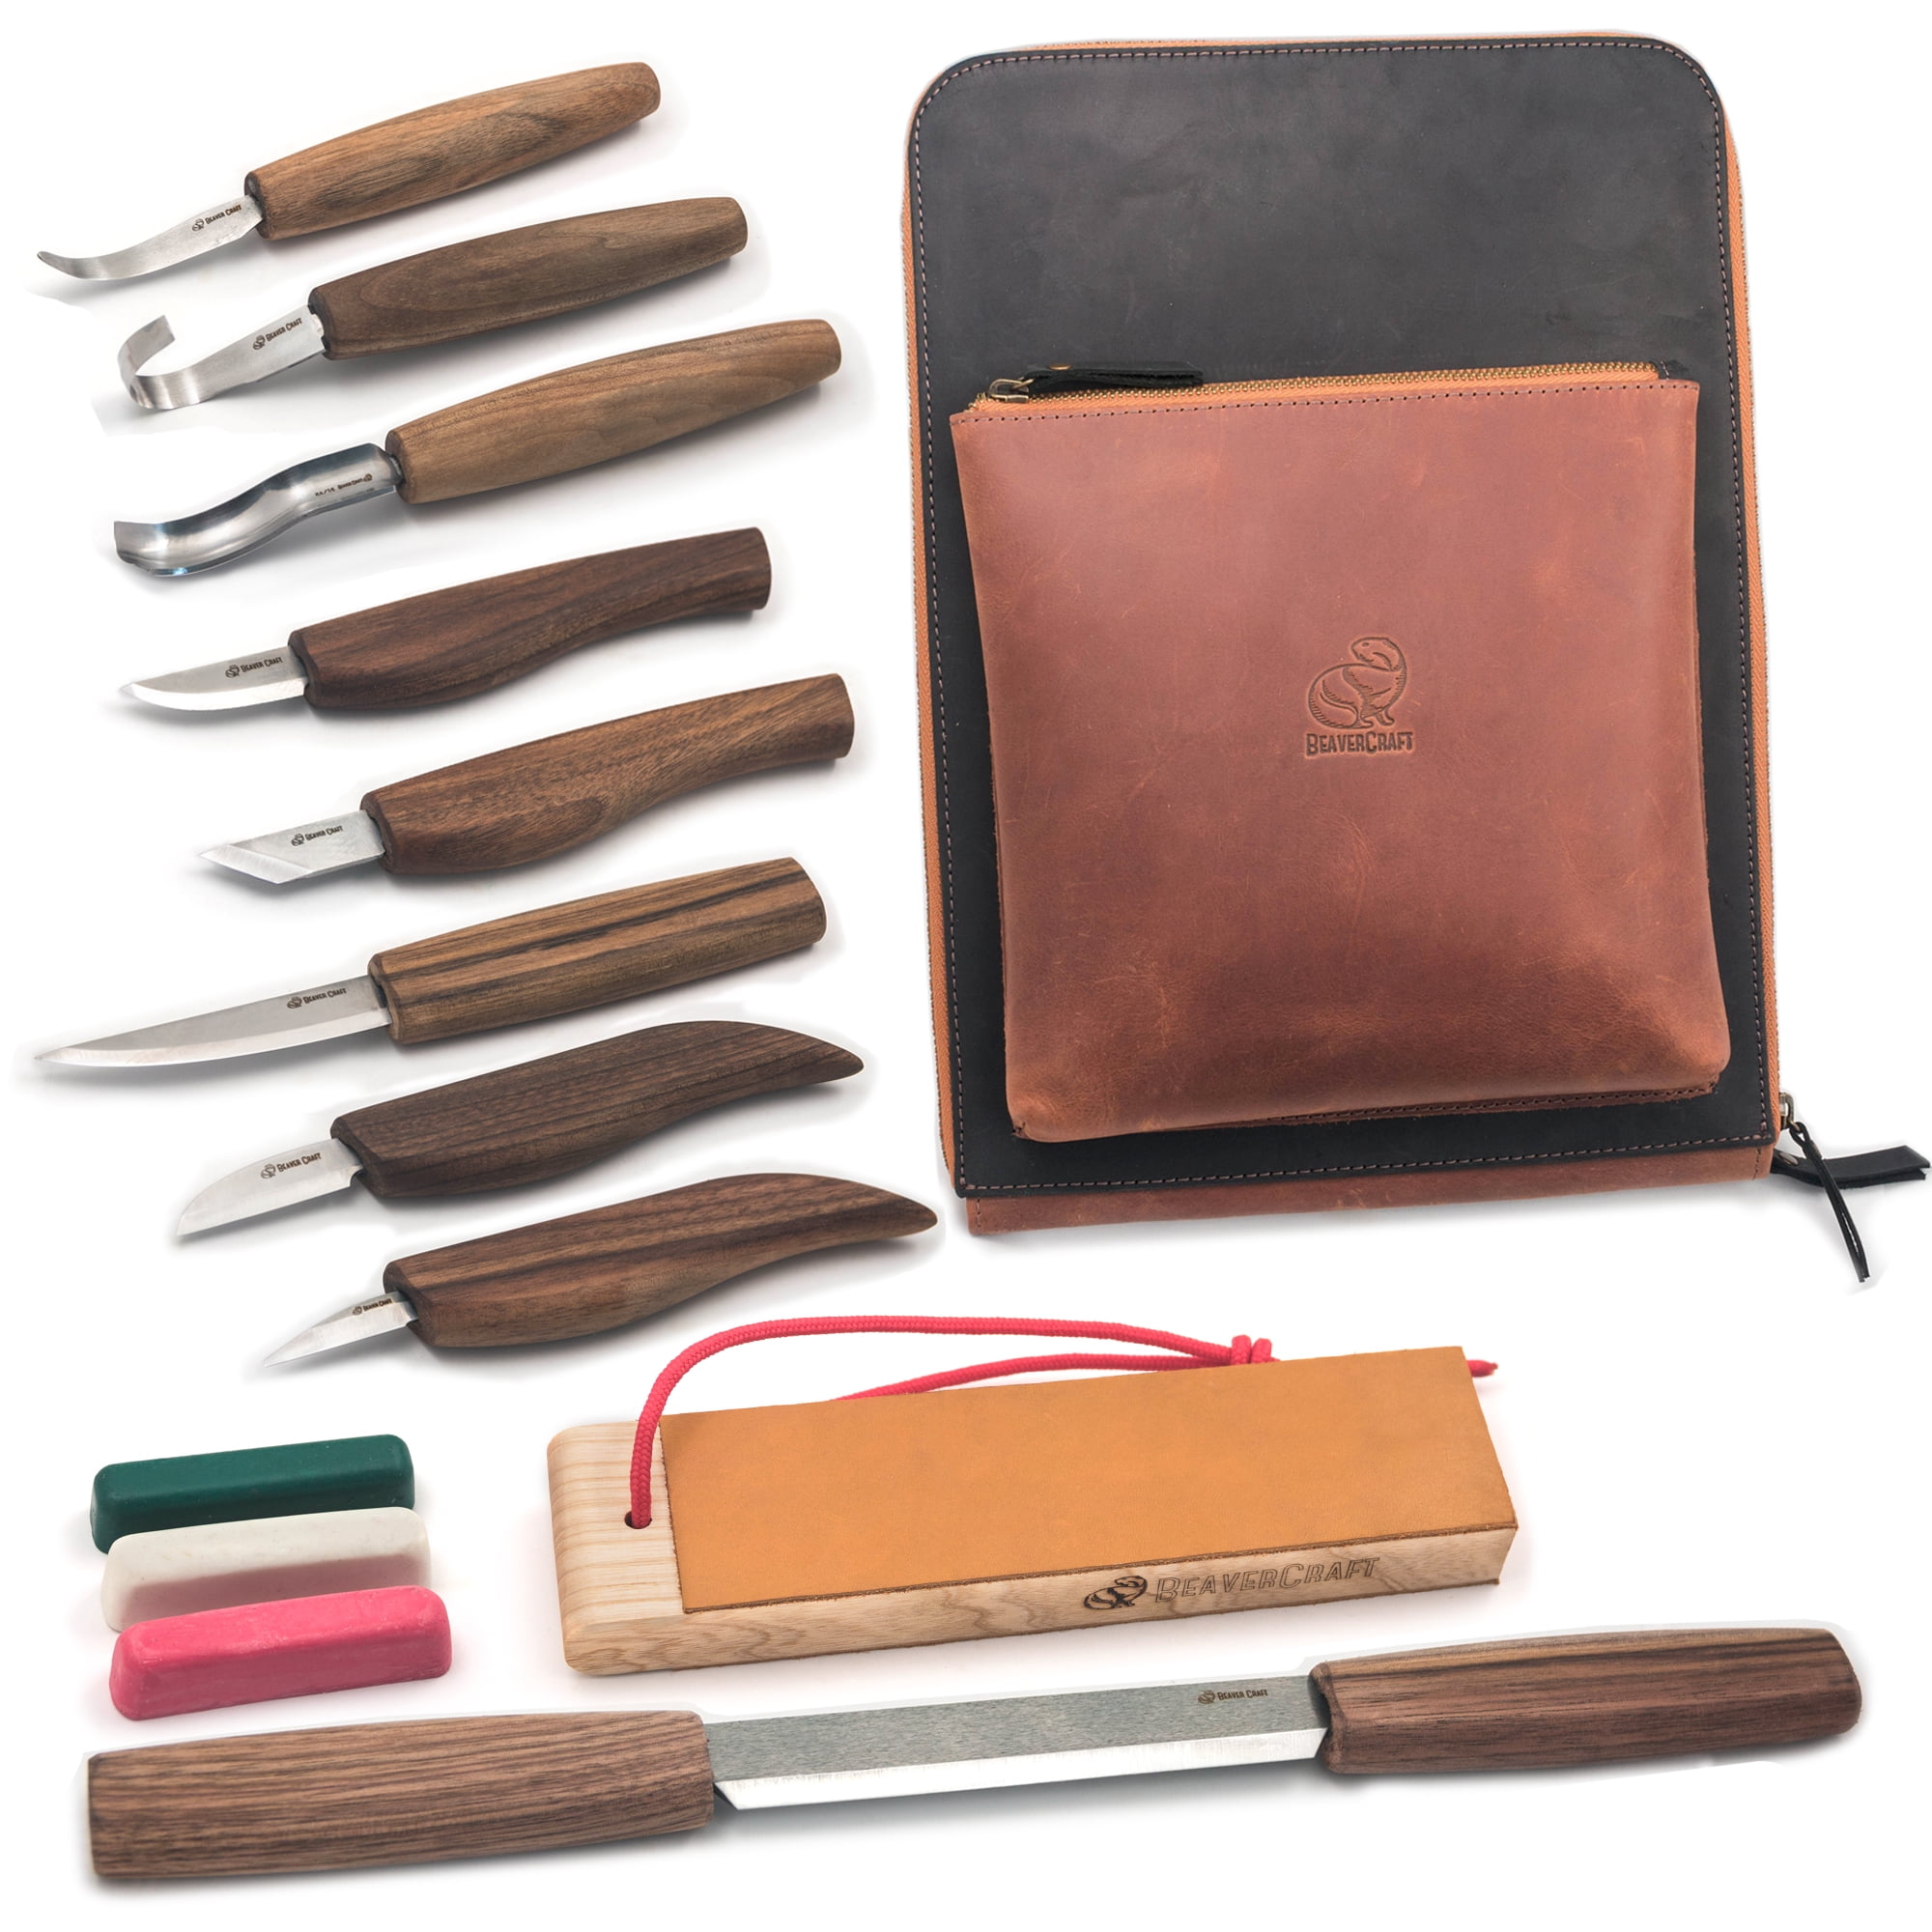 Basic set of carving tools - BeaverCraft – BeaverCraft Tools